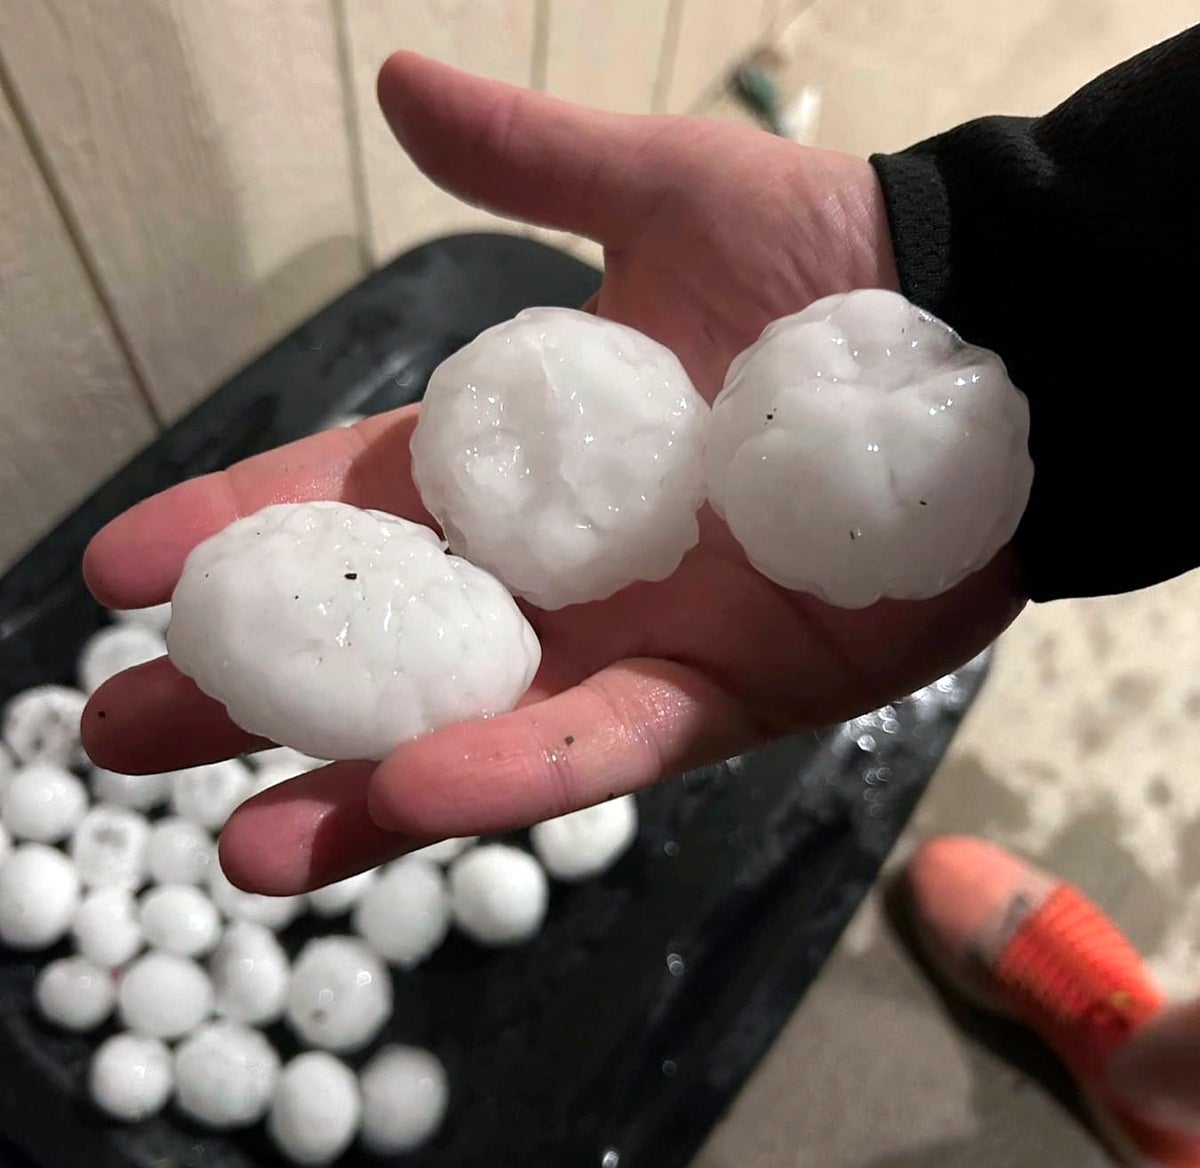 Storm carrying massive ‘gorilla hail’ threatens parts of Kansas and Missouri